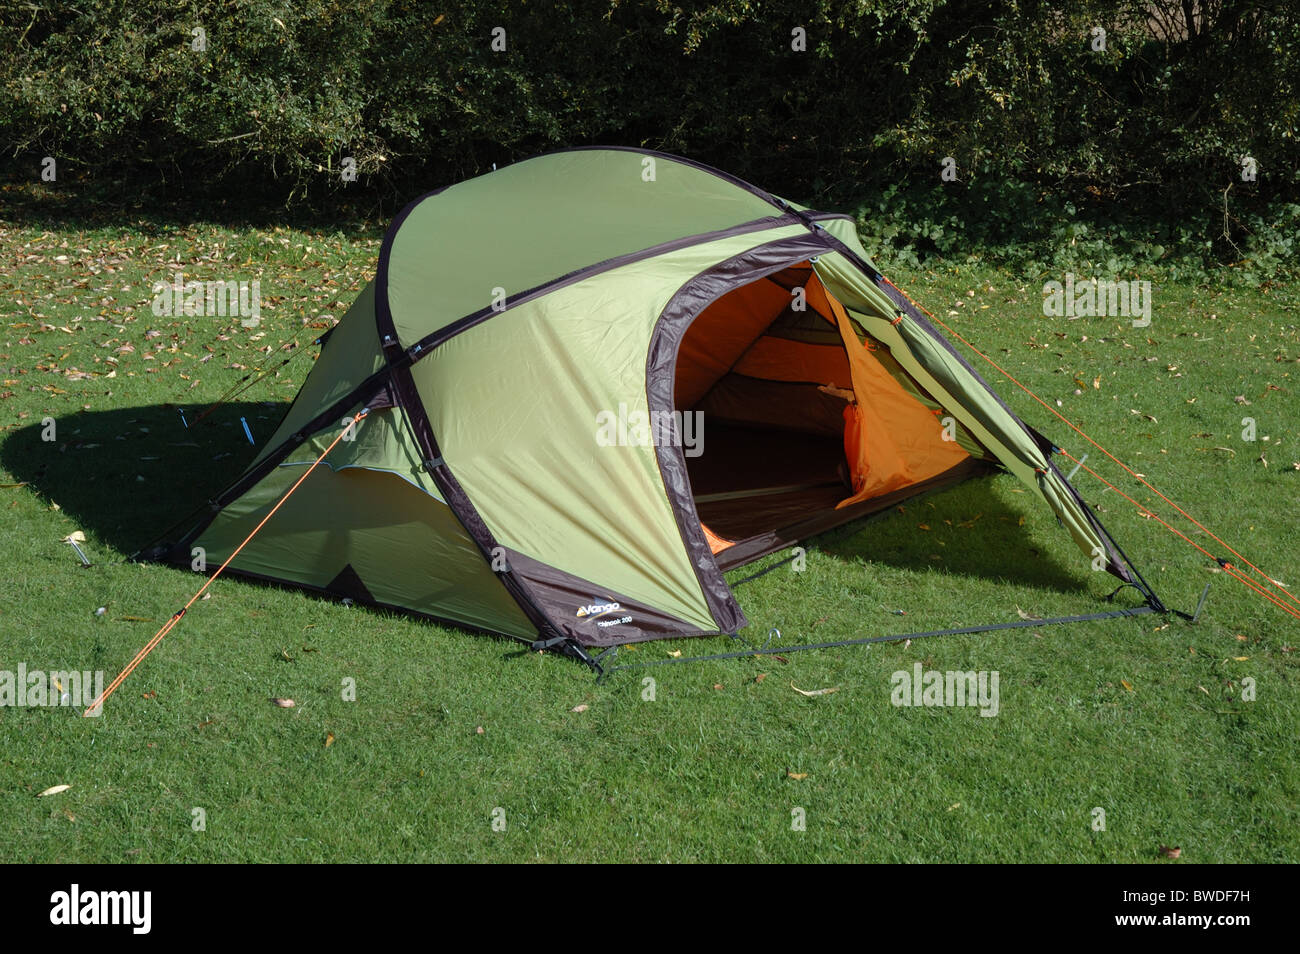 Vango Chinook 200 lightweight backpacking tent Stock Photo - Alamy